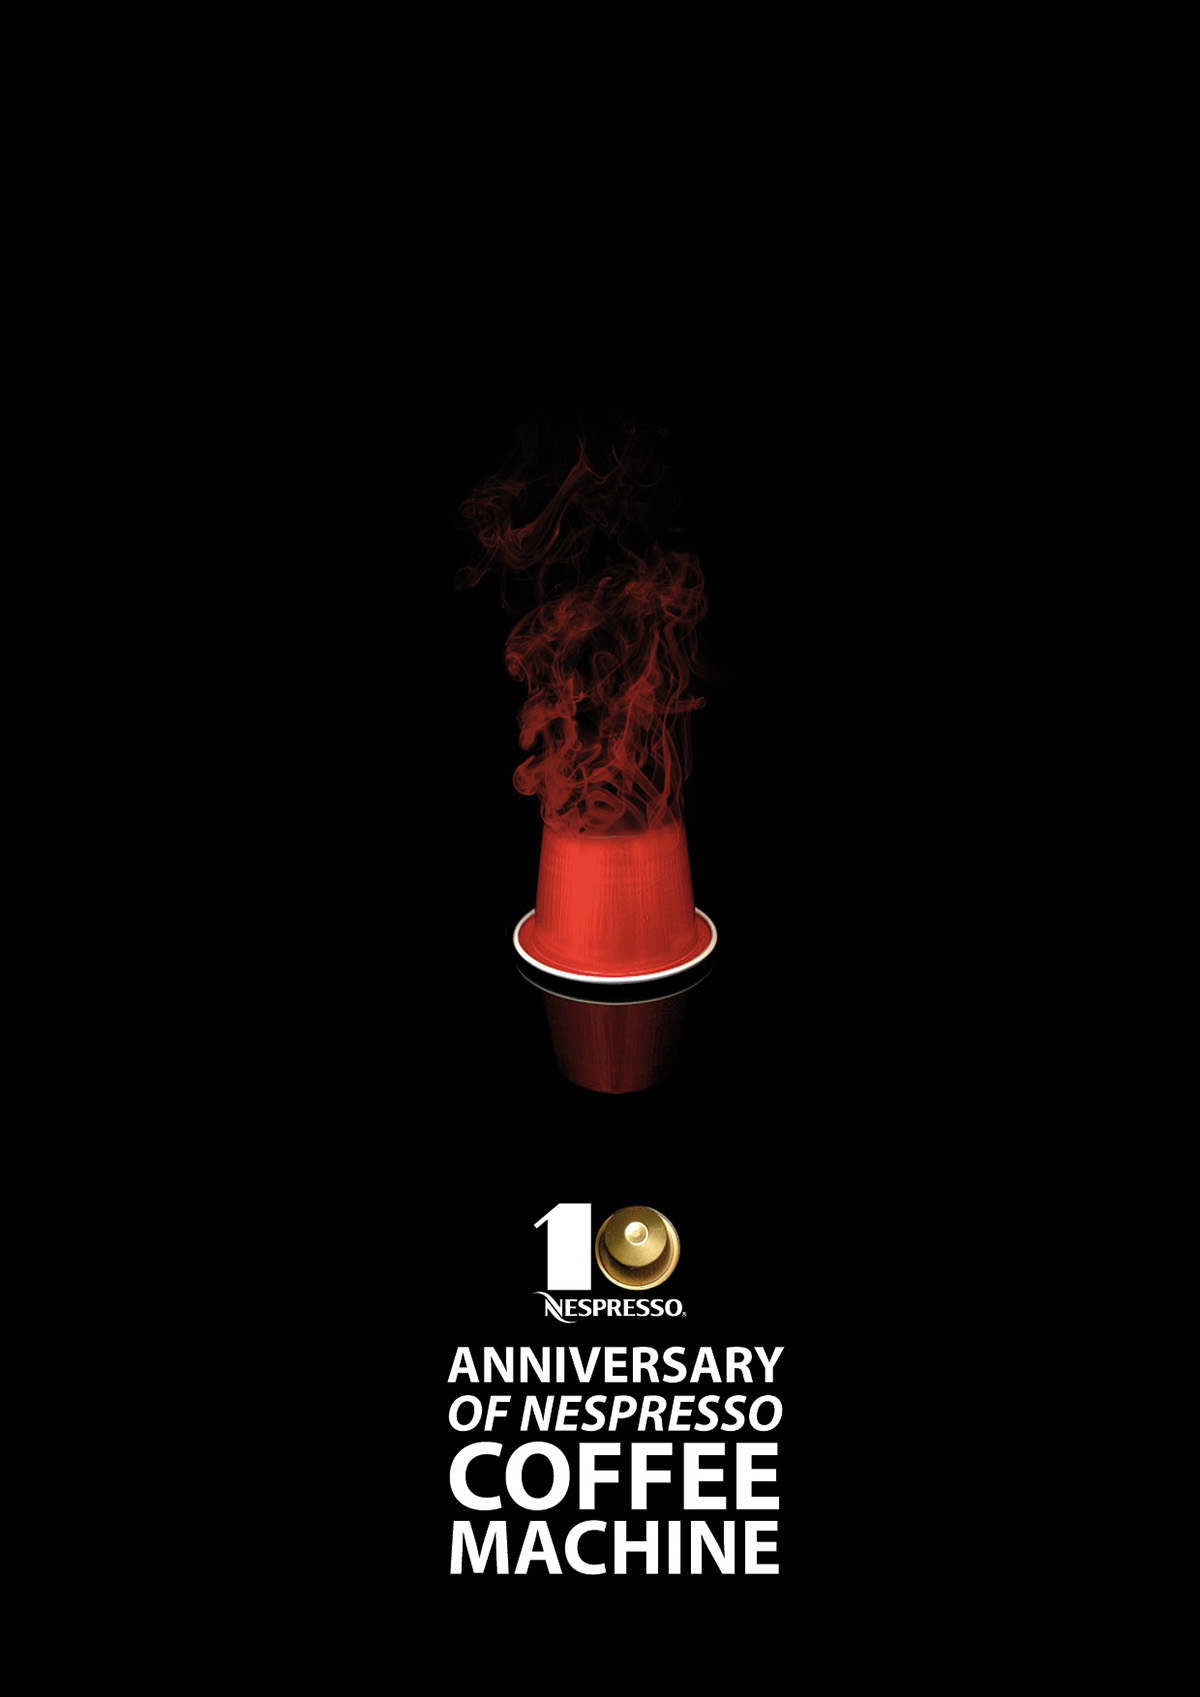 Coffee Nespresso tenth anniversary graphic poster